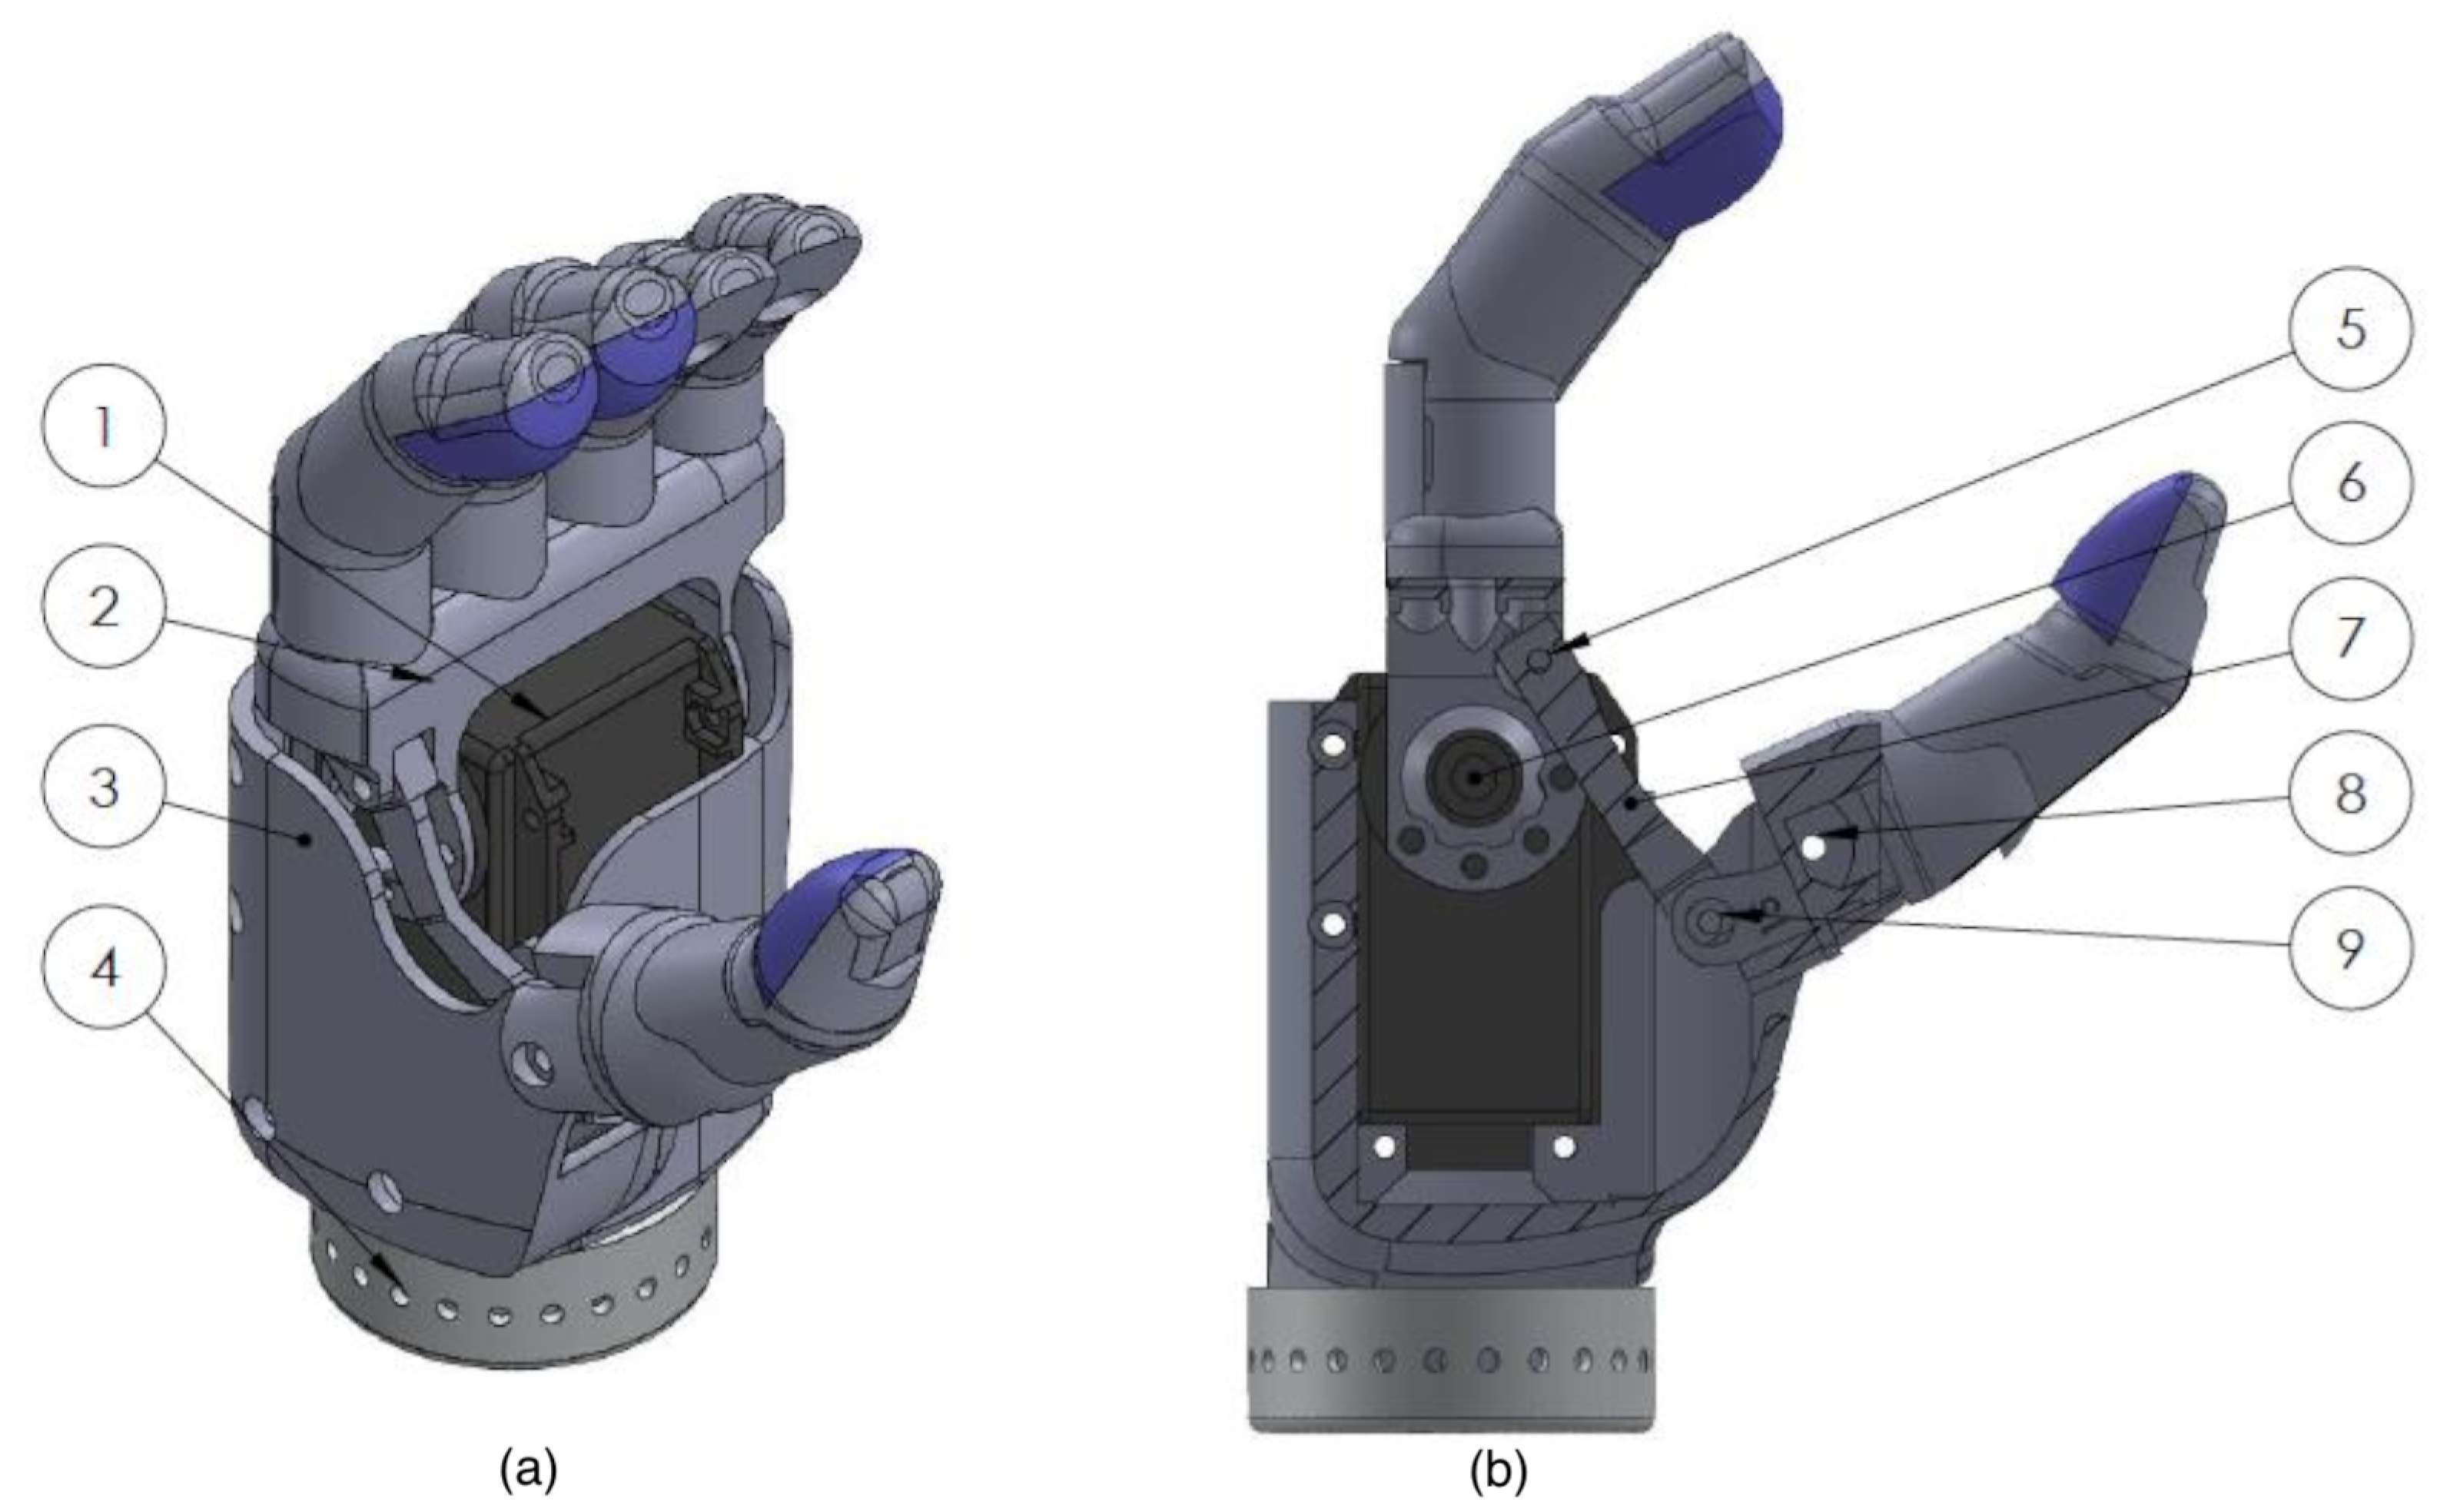 Compliant Prosthetic Hand With Sensorimotor Control and Sensory